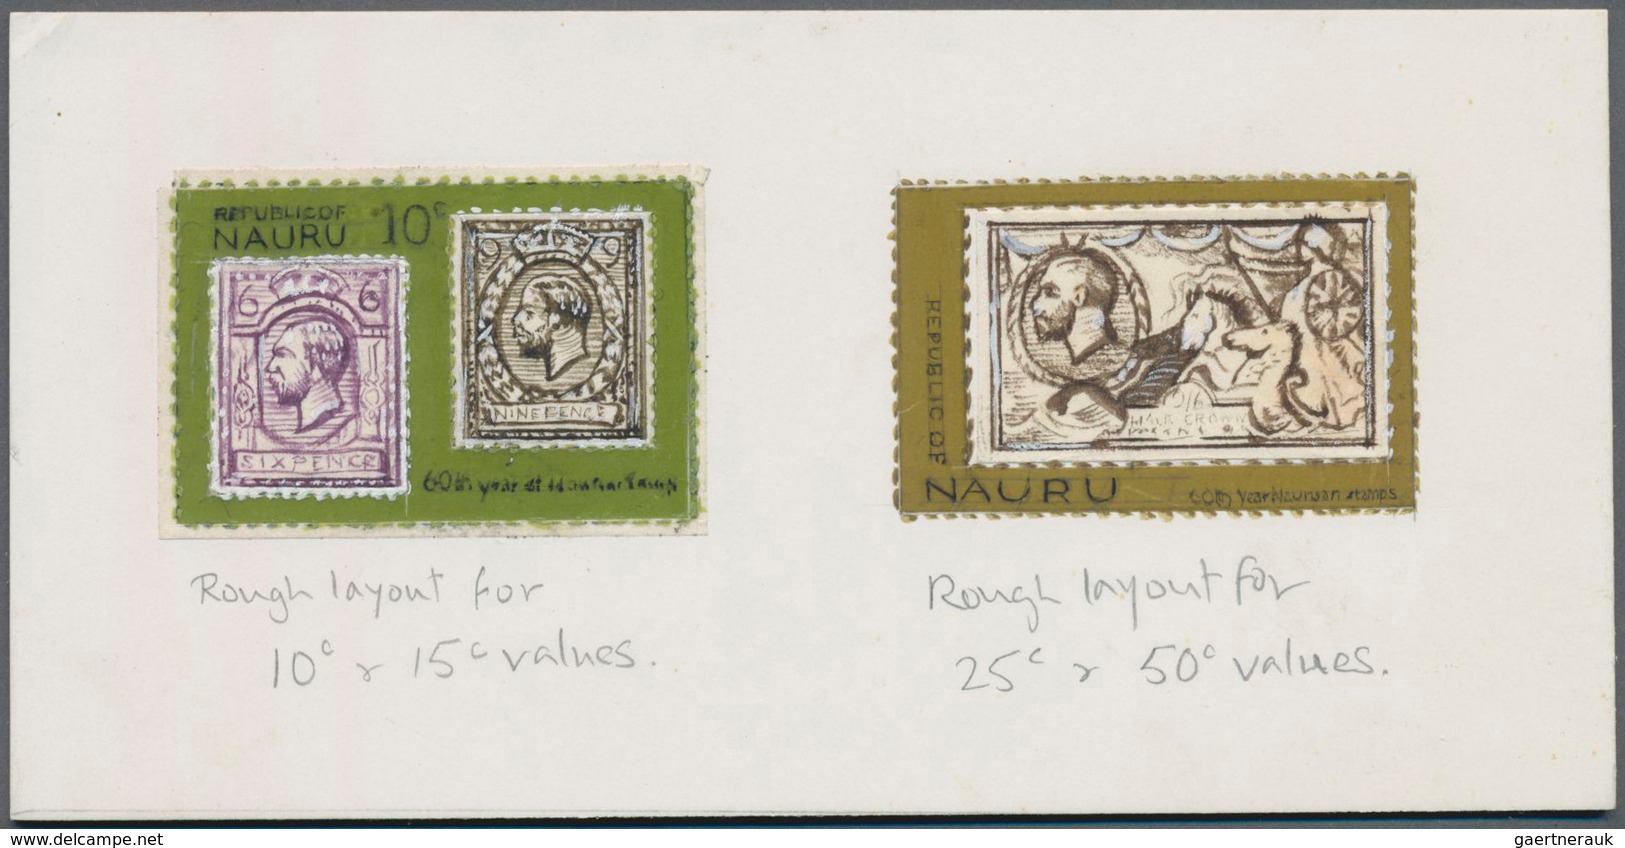 Nauru: 1976, ARTWORK, 60 YEARS NAURU STAMPS, Two Handpainting ESSAYS (simular To The Issued Stamps) - Nauru